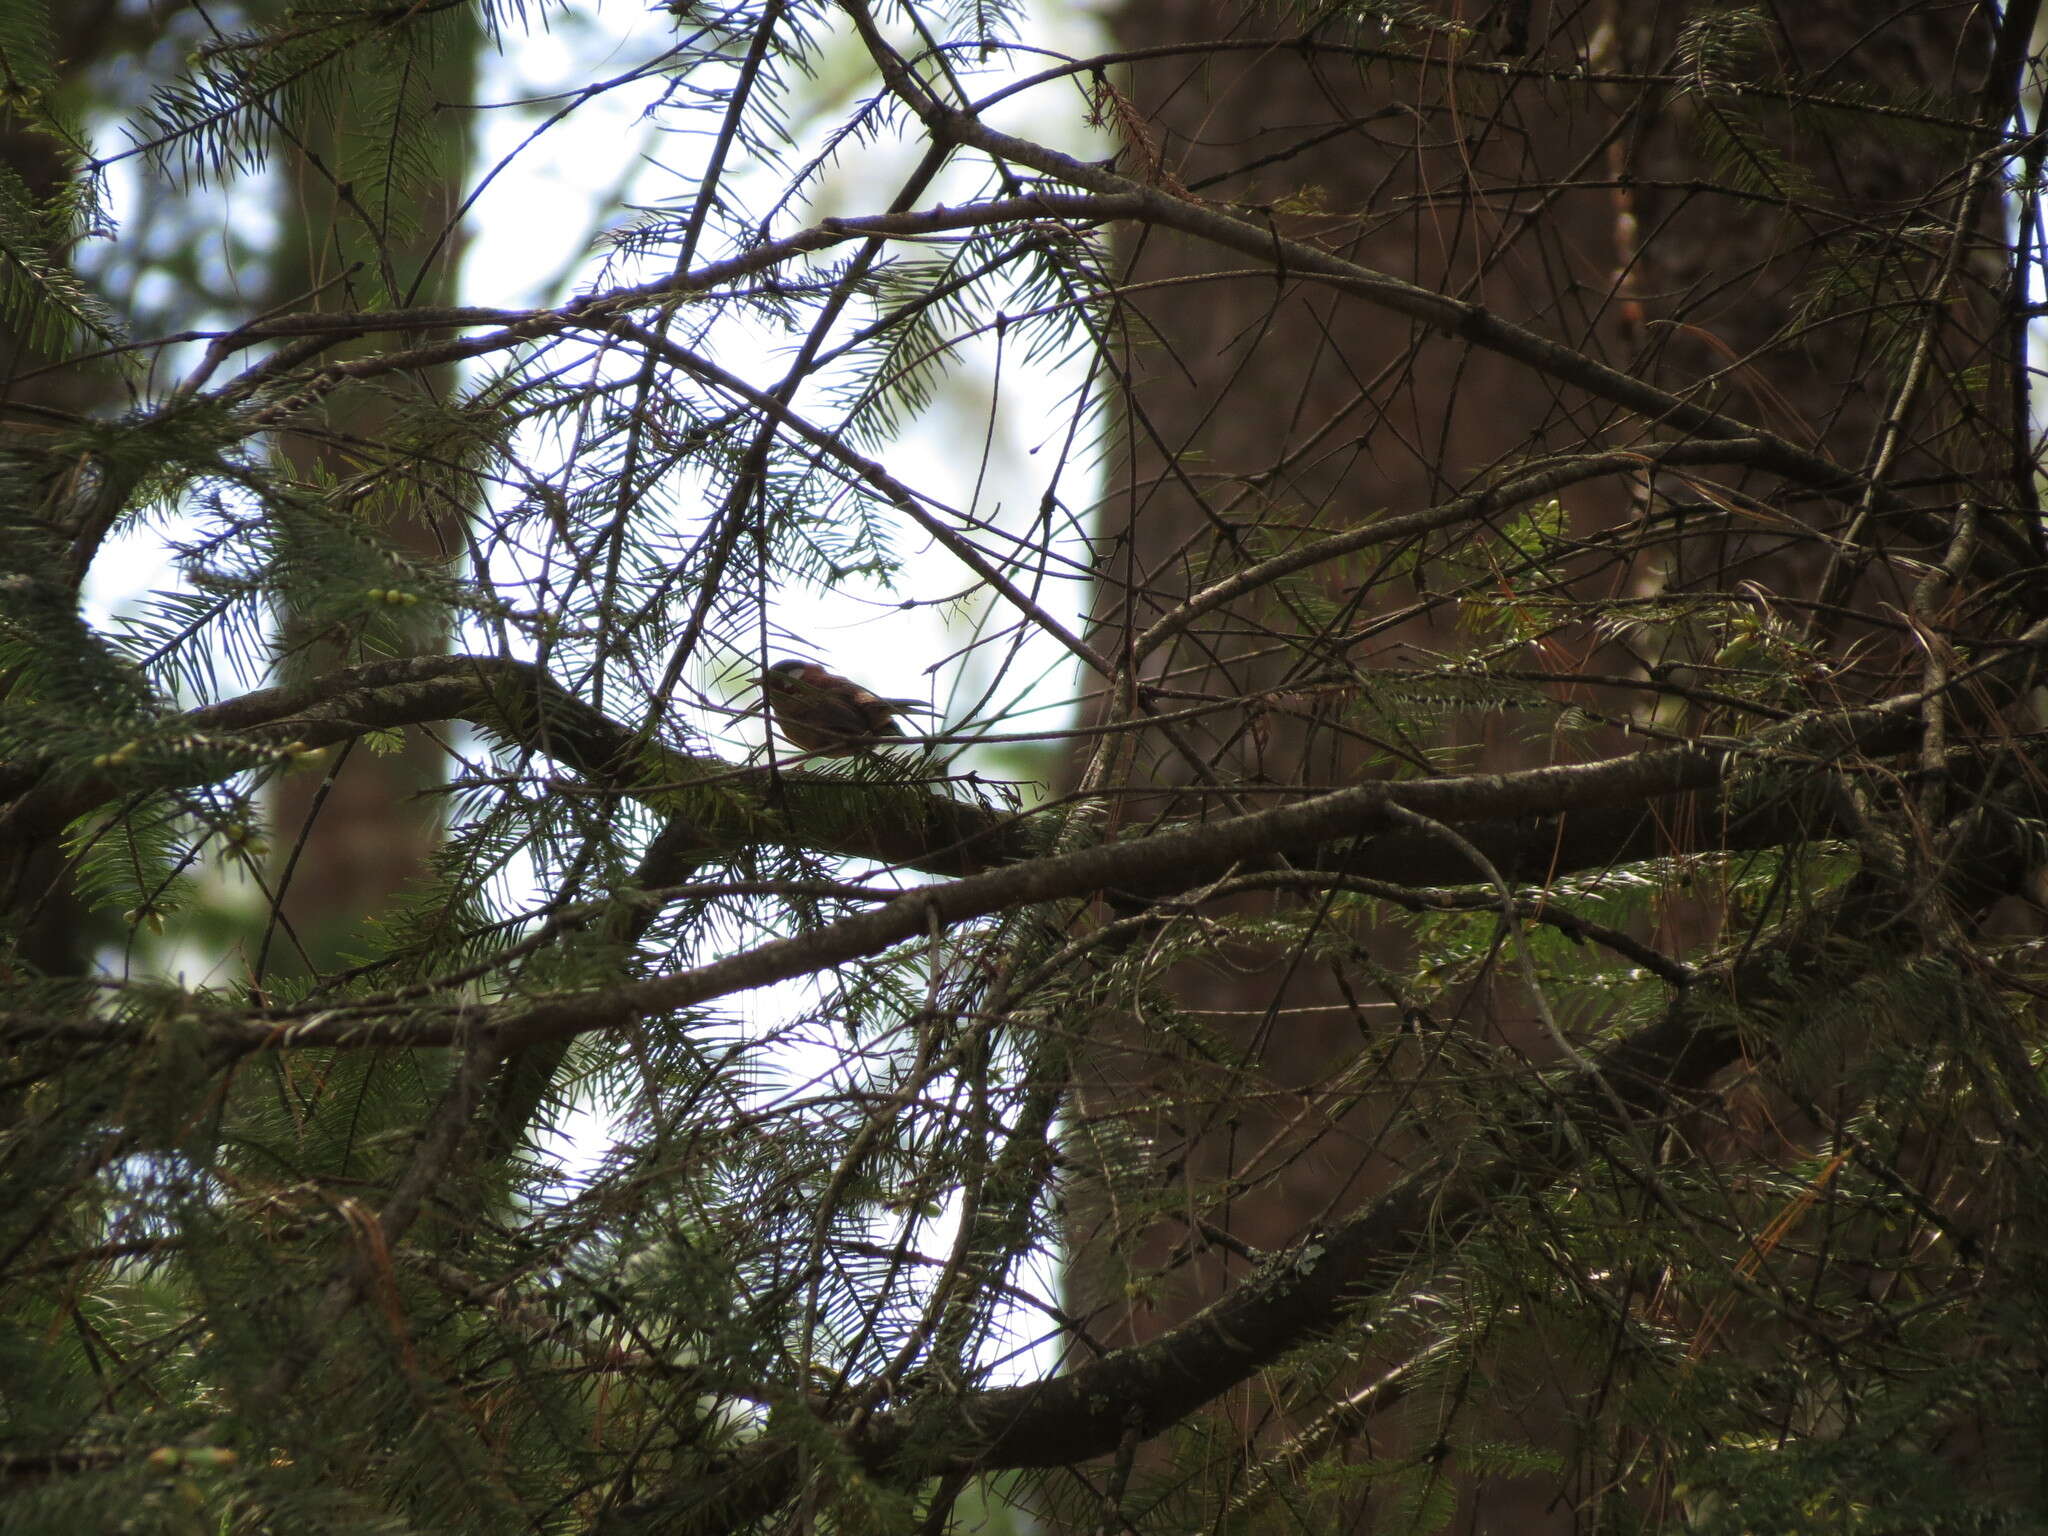 Image of Red Warbler